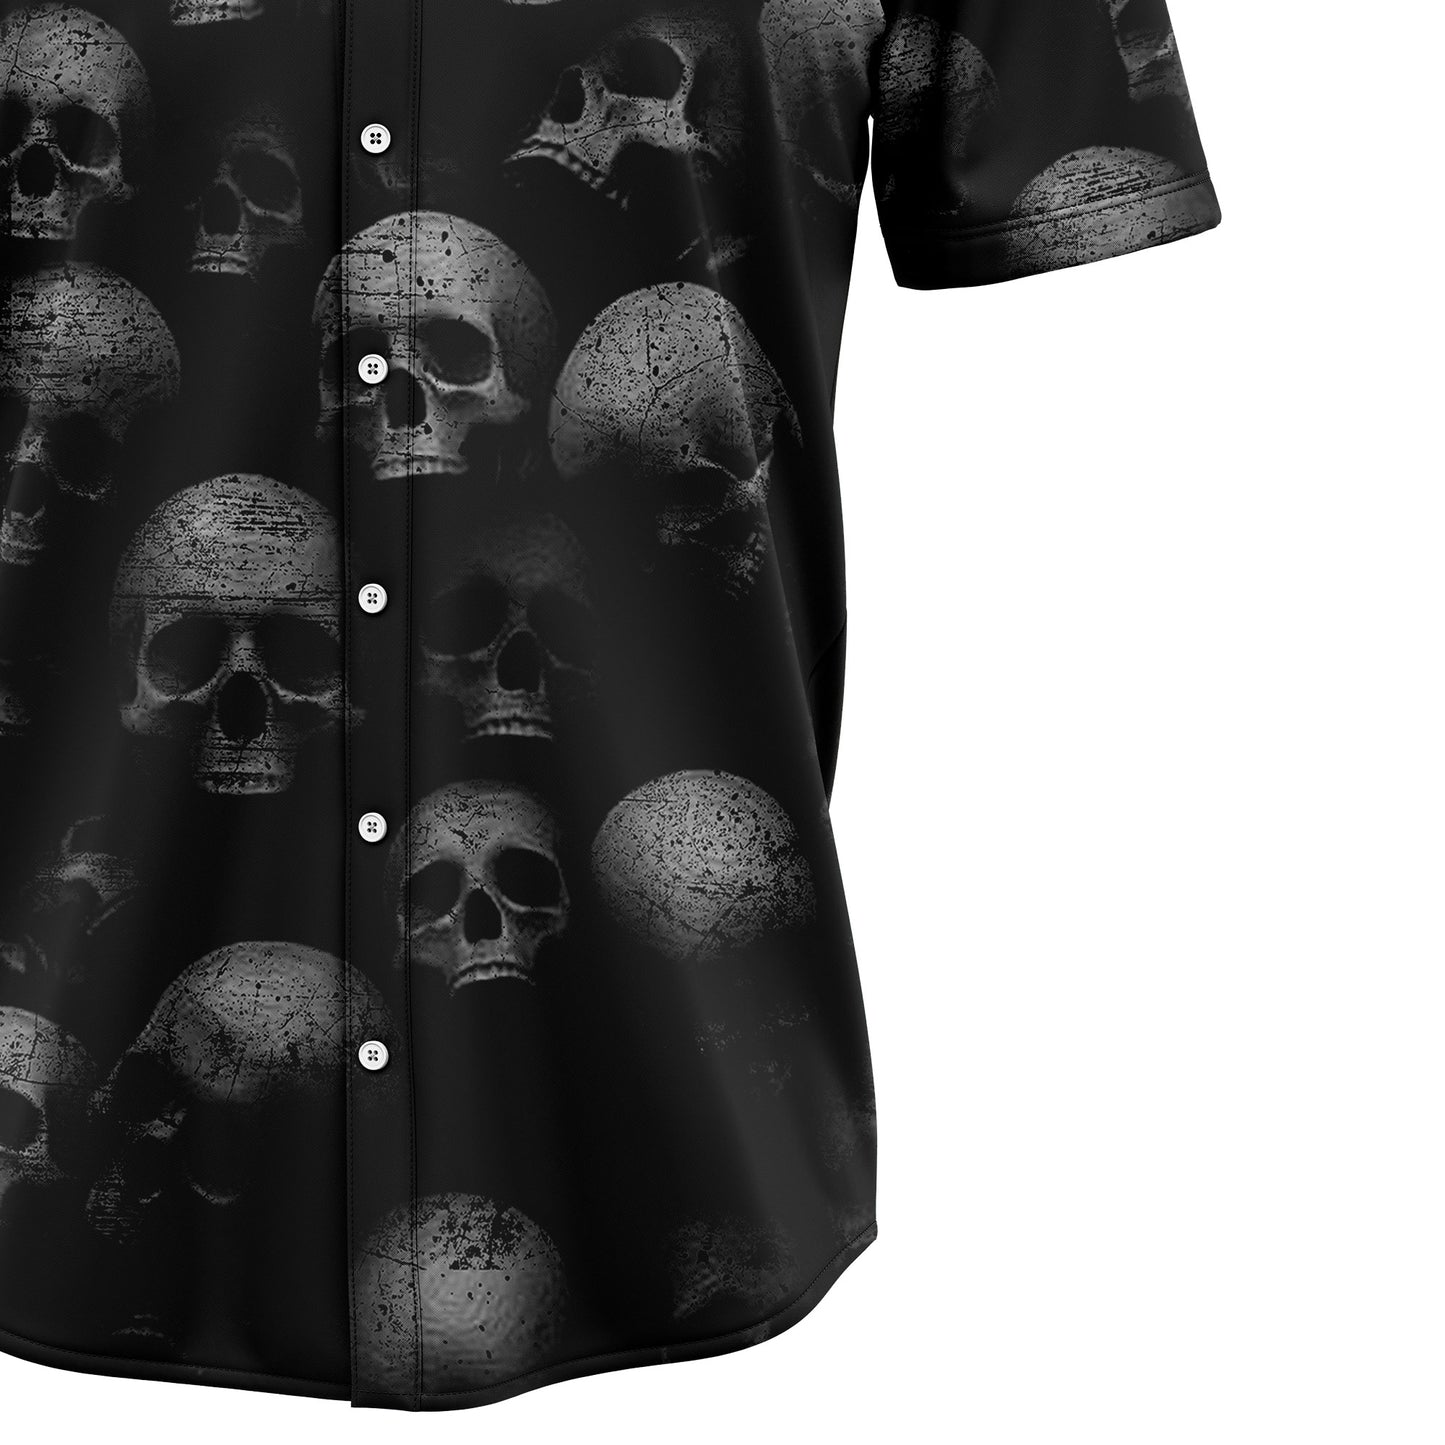 Skull Awesome D0307 Hawaiian Shirt